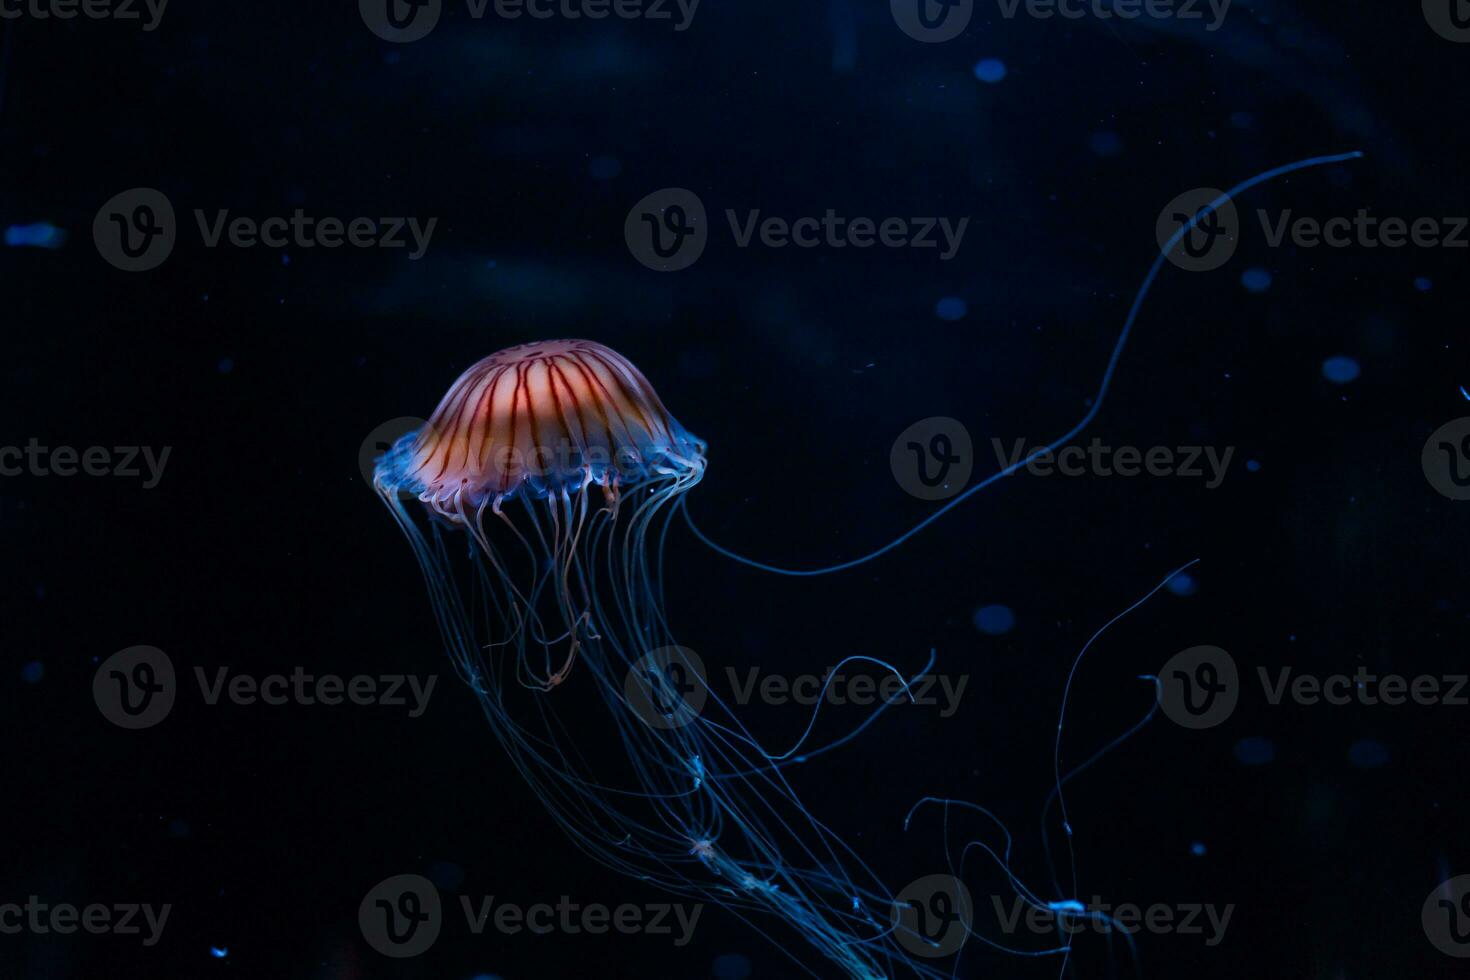 små maneter upplyst med blå ljus simning i akvarium. foto